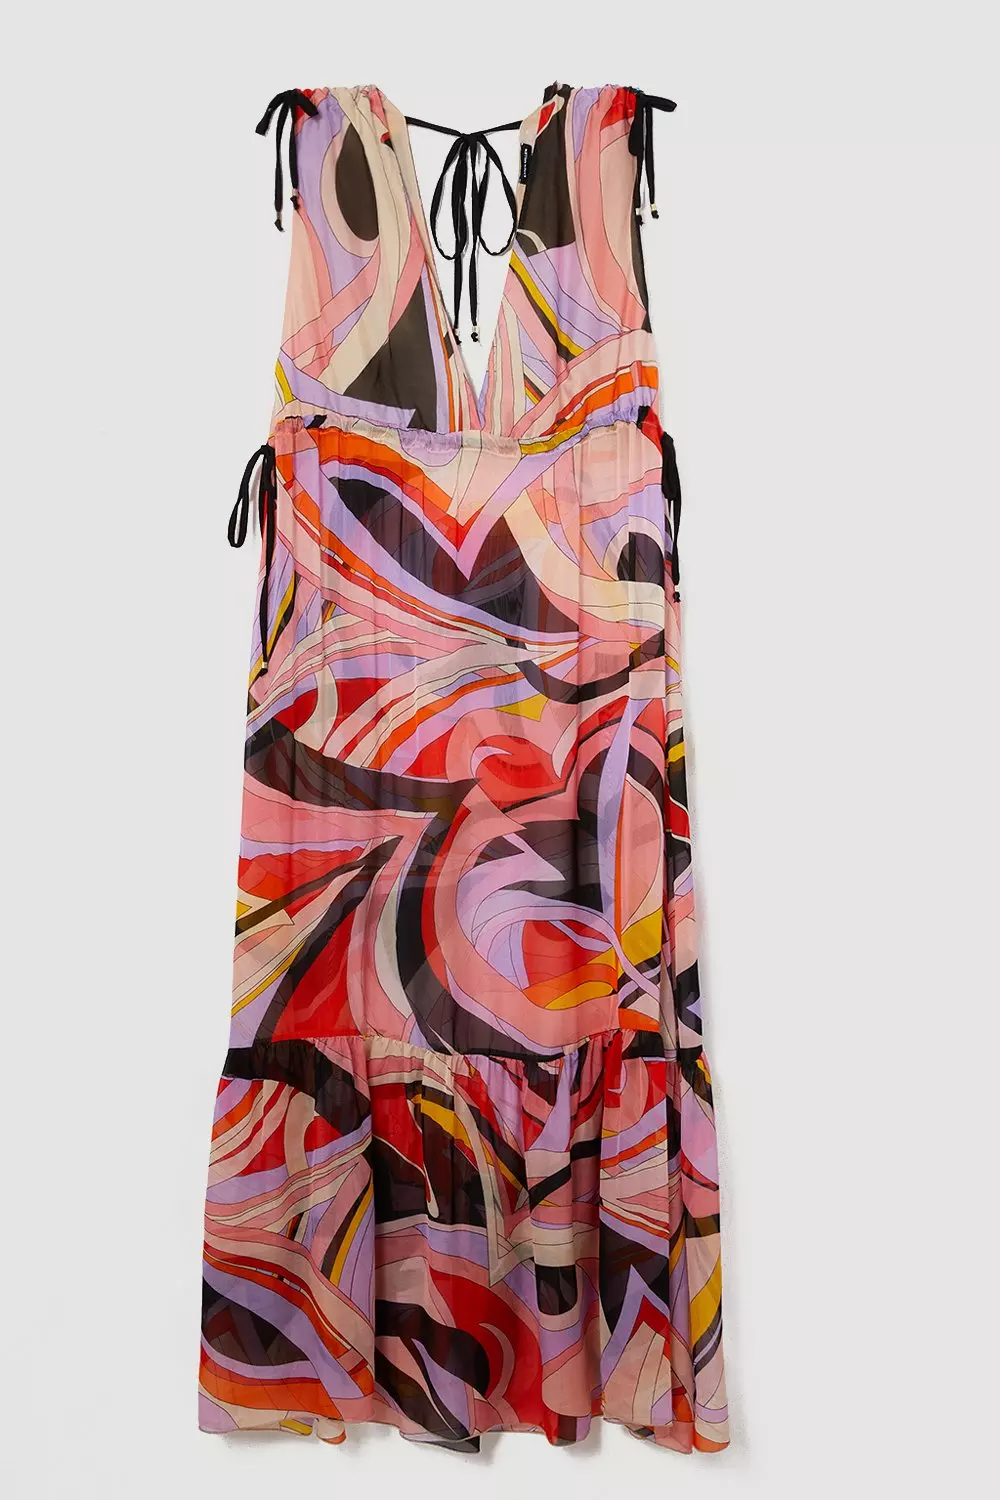 Fashionwomen Formal Viscose Maxi Dress Summer Casual Abstract